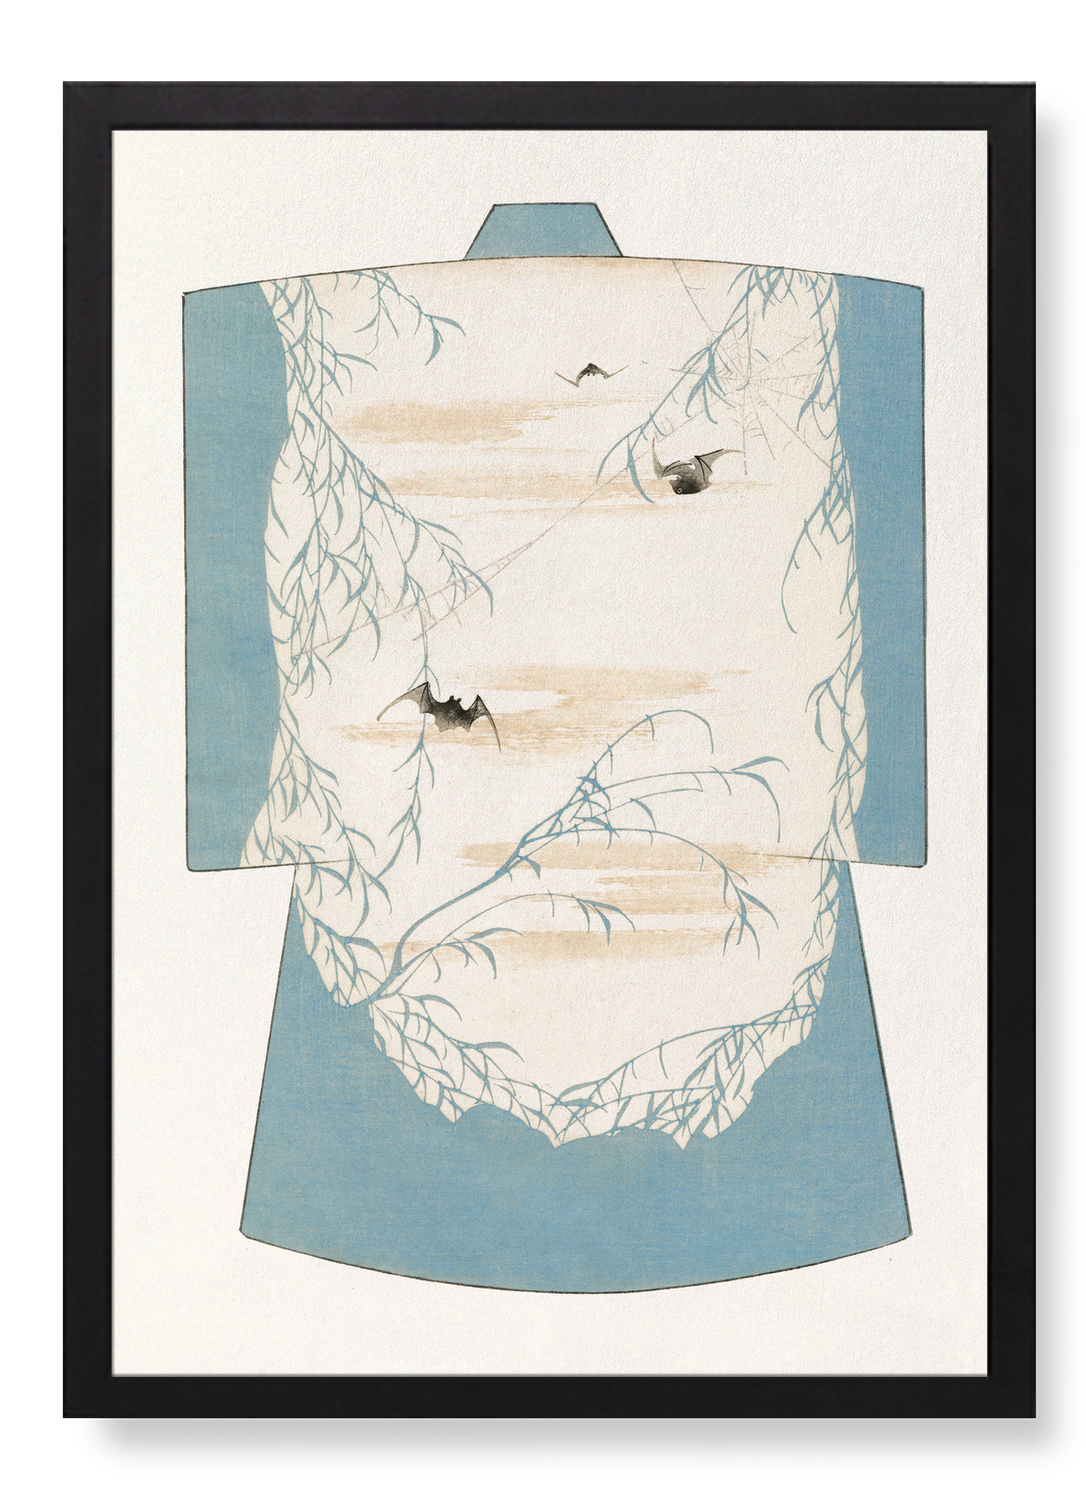 KIMONO OF BATS AND SPIDER WEB (1899)